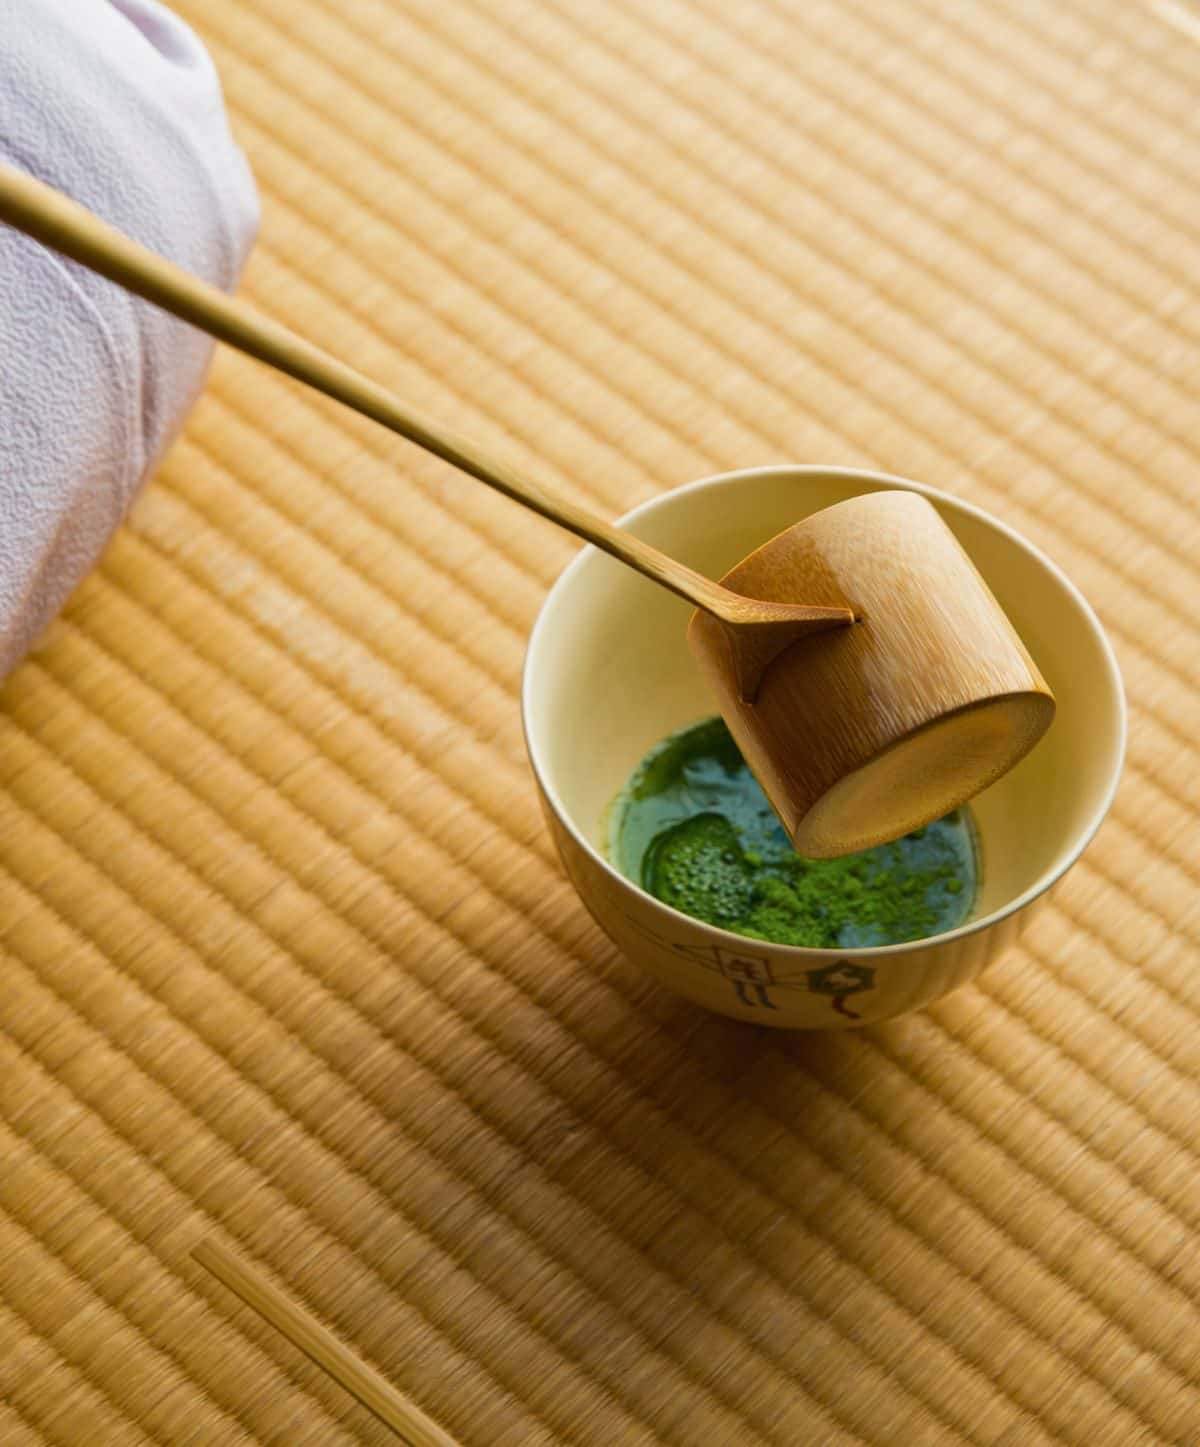 Japanese Tea Ceremony Steps